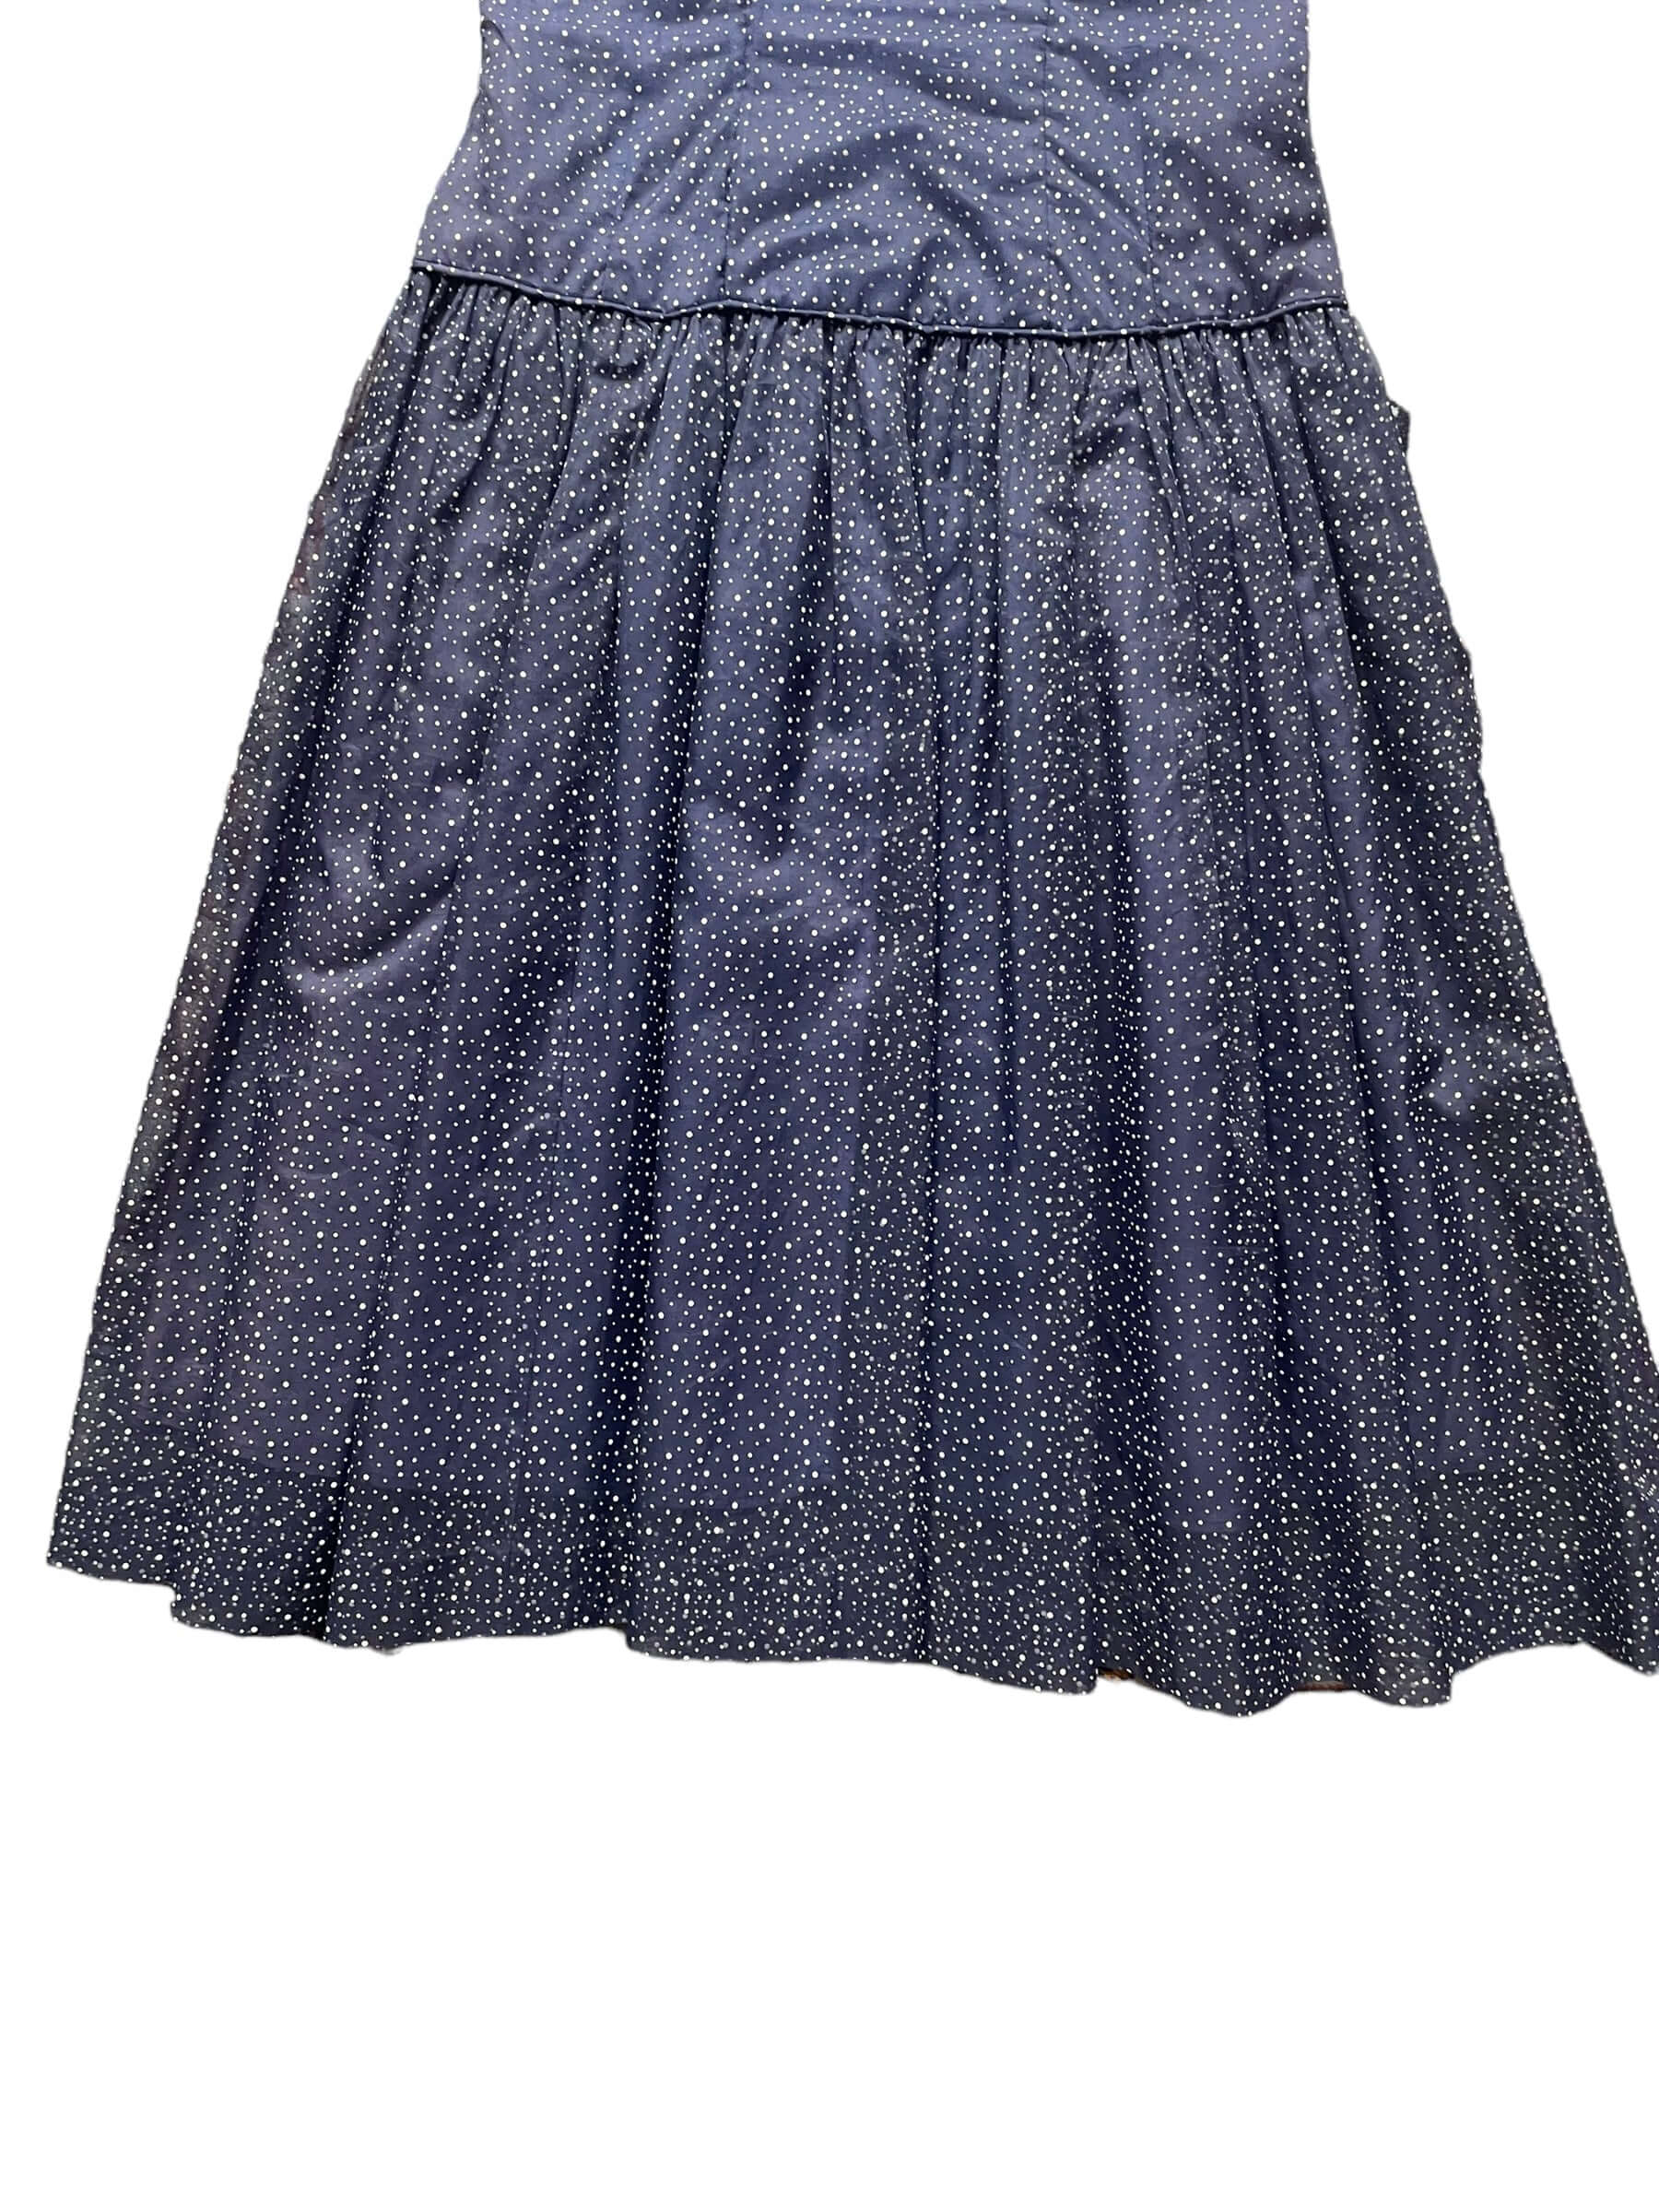 Back skirt view of Vintage 1940s Navy Blue Swiss Dot Dress |  Barn Owl Vintage Dresses | Seattle Vintage Ladies Clothing